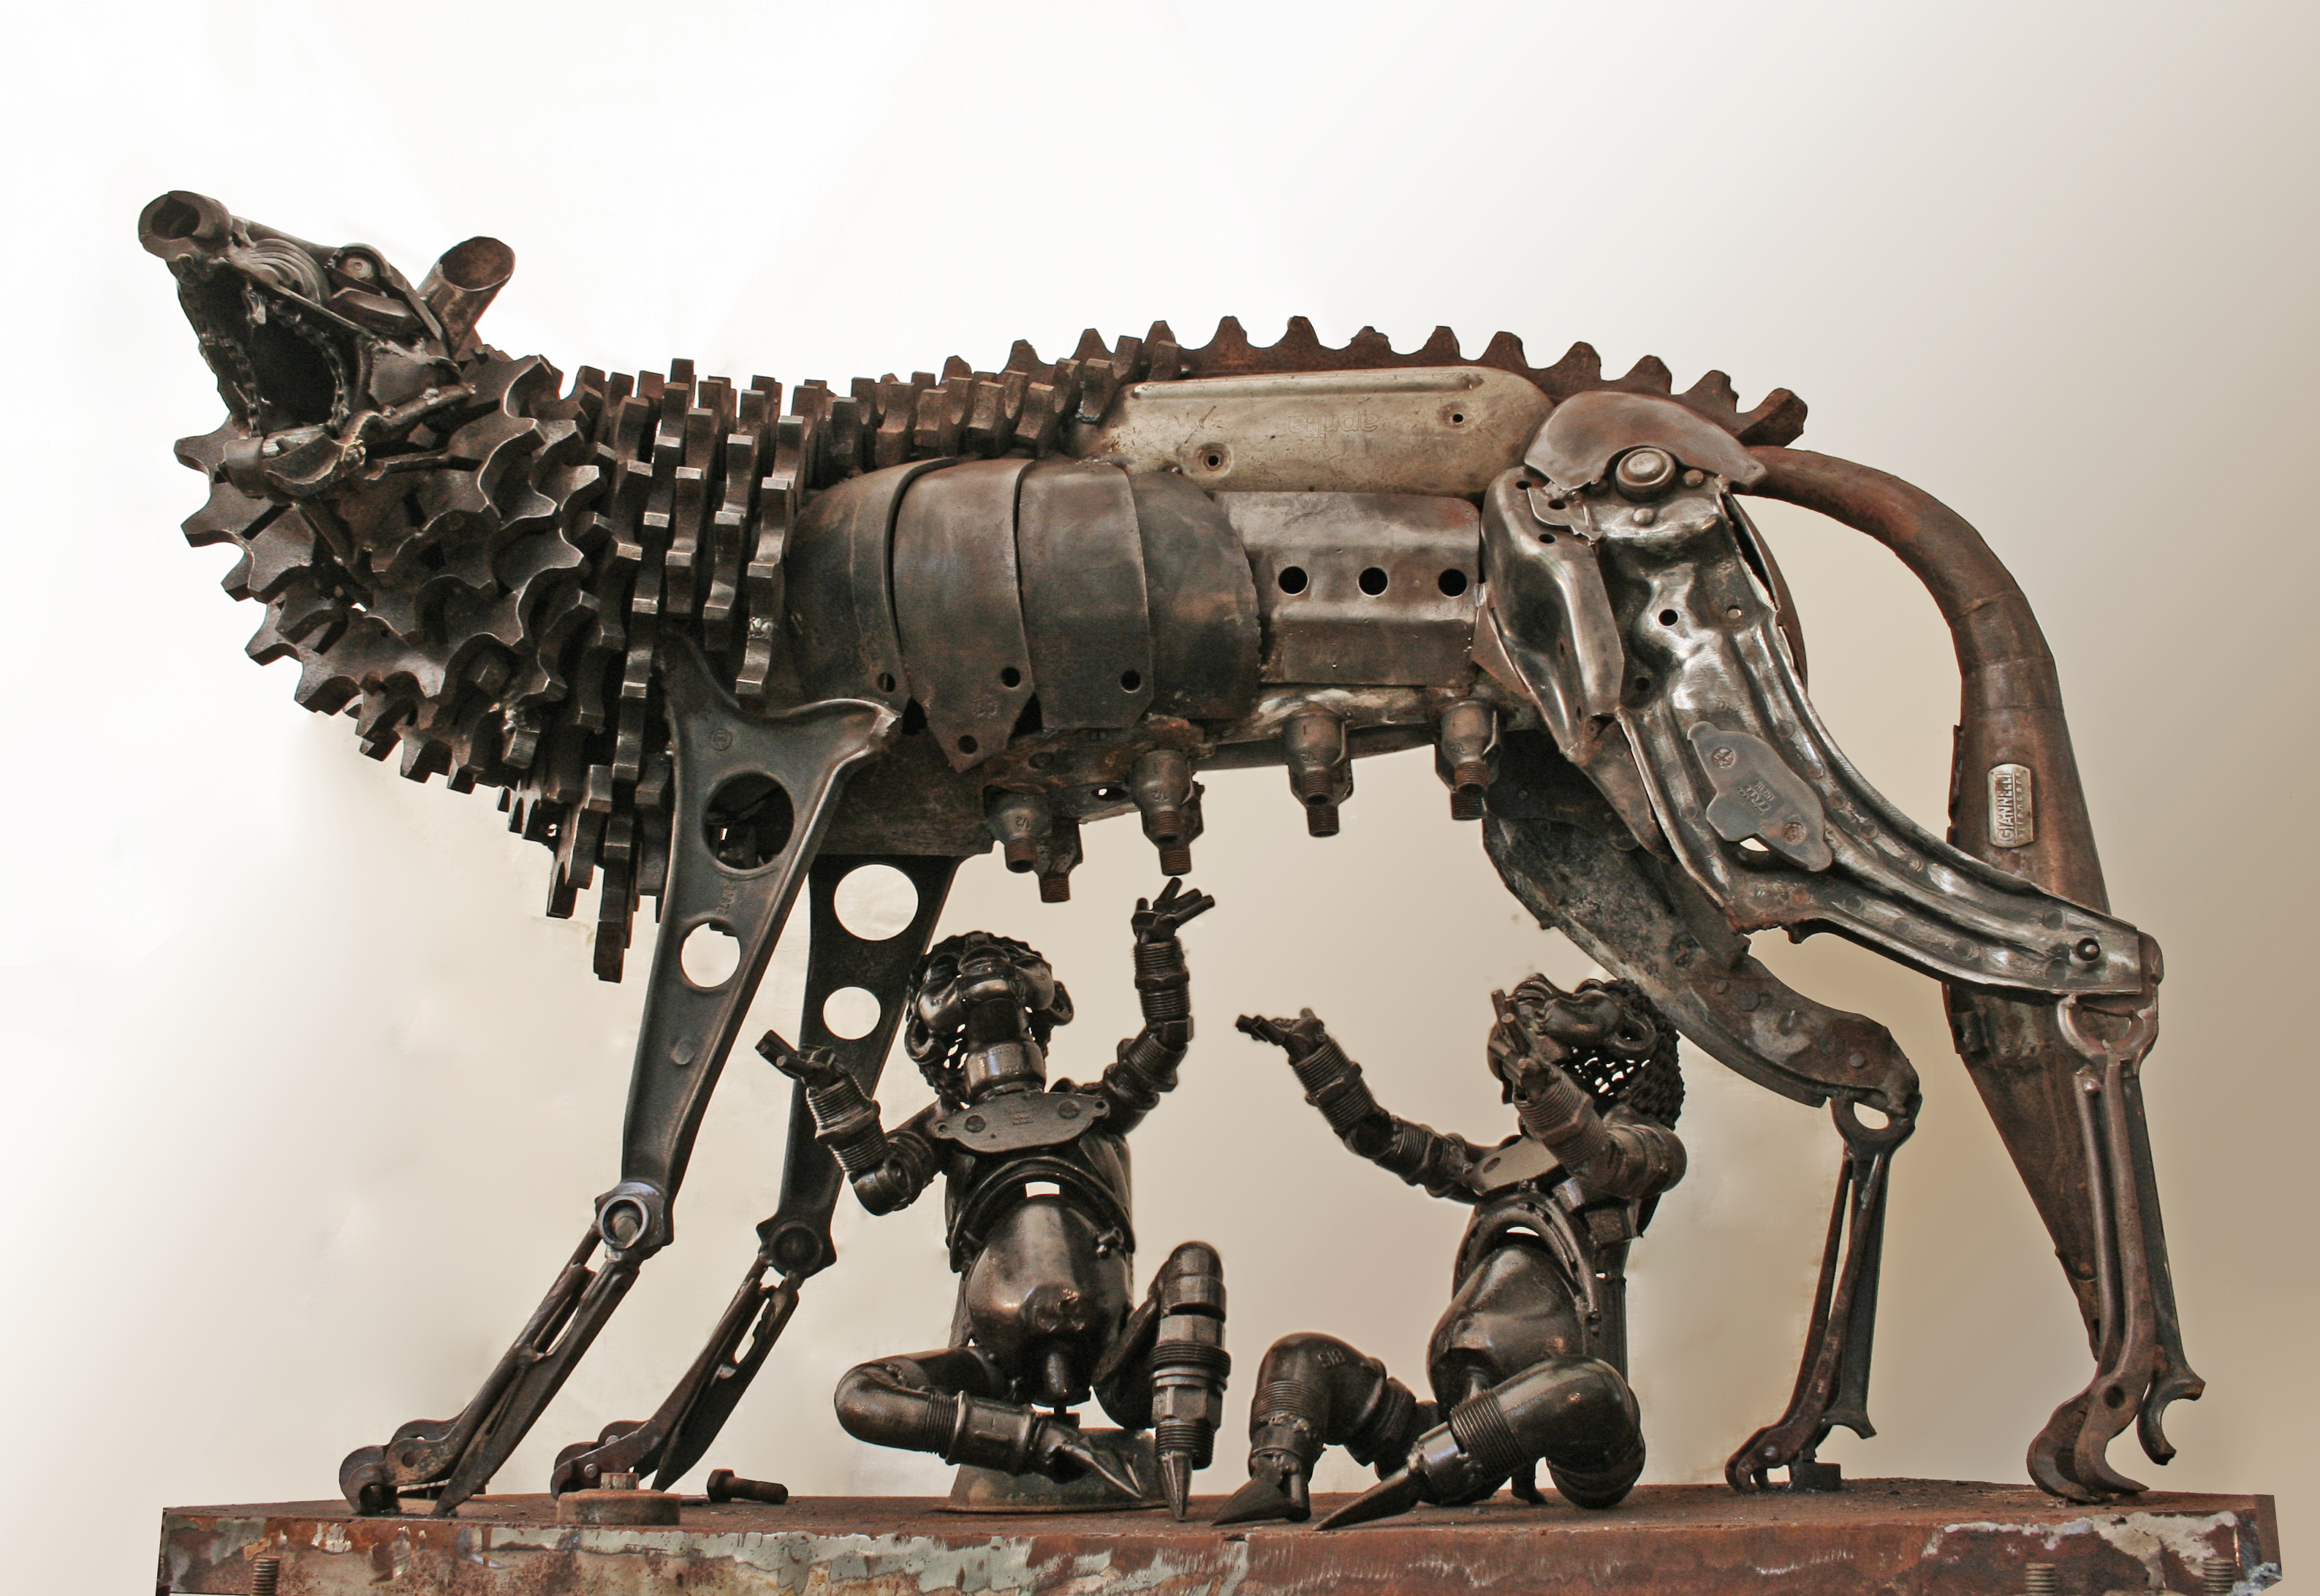 Scrap metal sculptures by Patrick ALO' - Art People Gallery